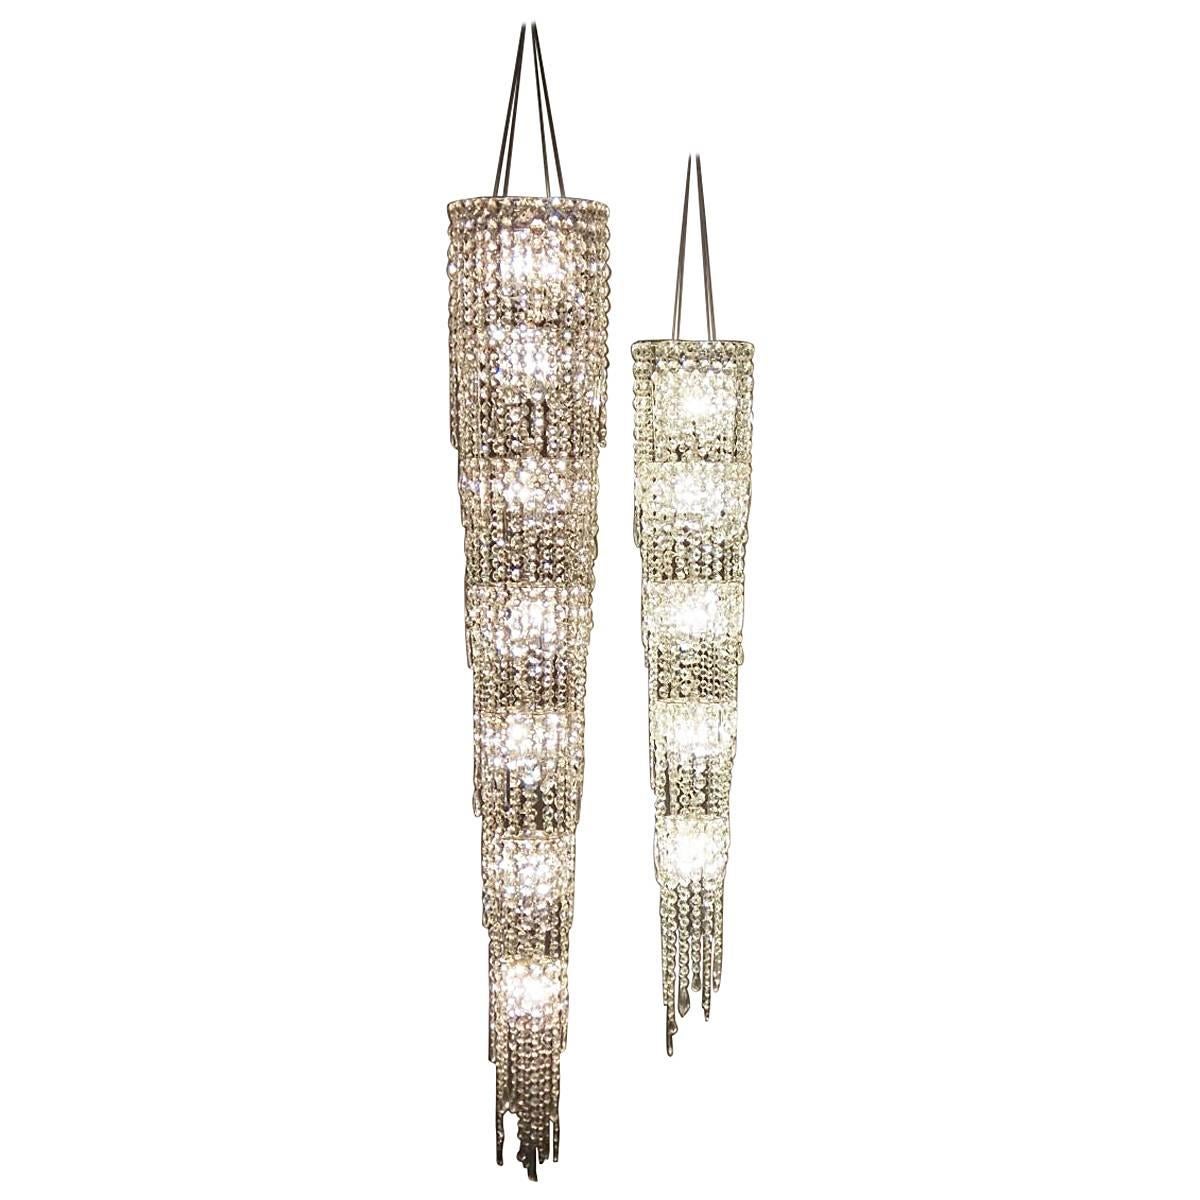 Lolli e Memmoli Caifa Crystal Pendant Light Handcrafted in Italy Modern Design For Sale